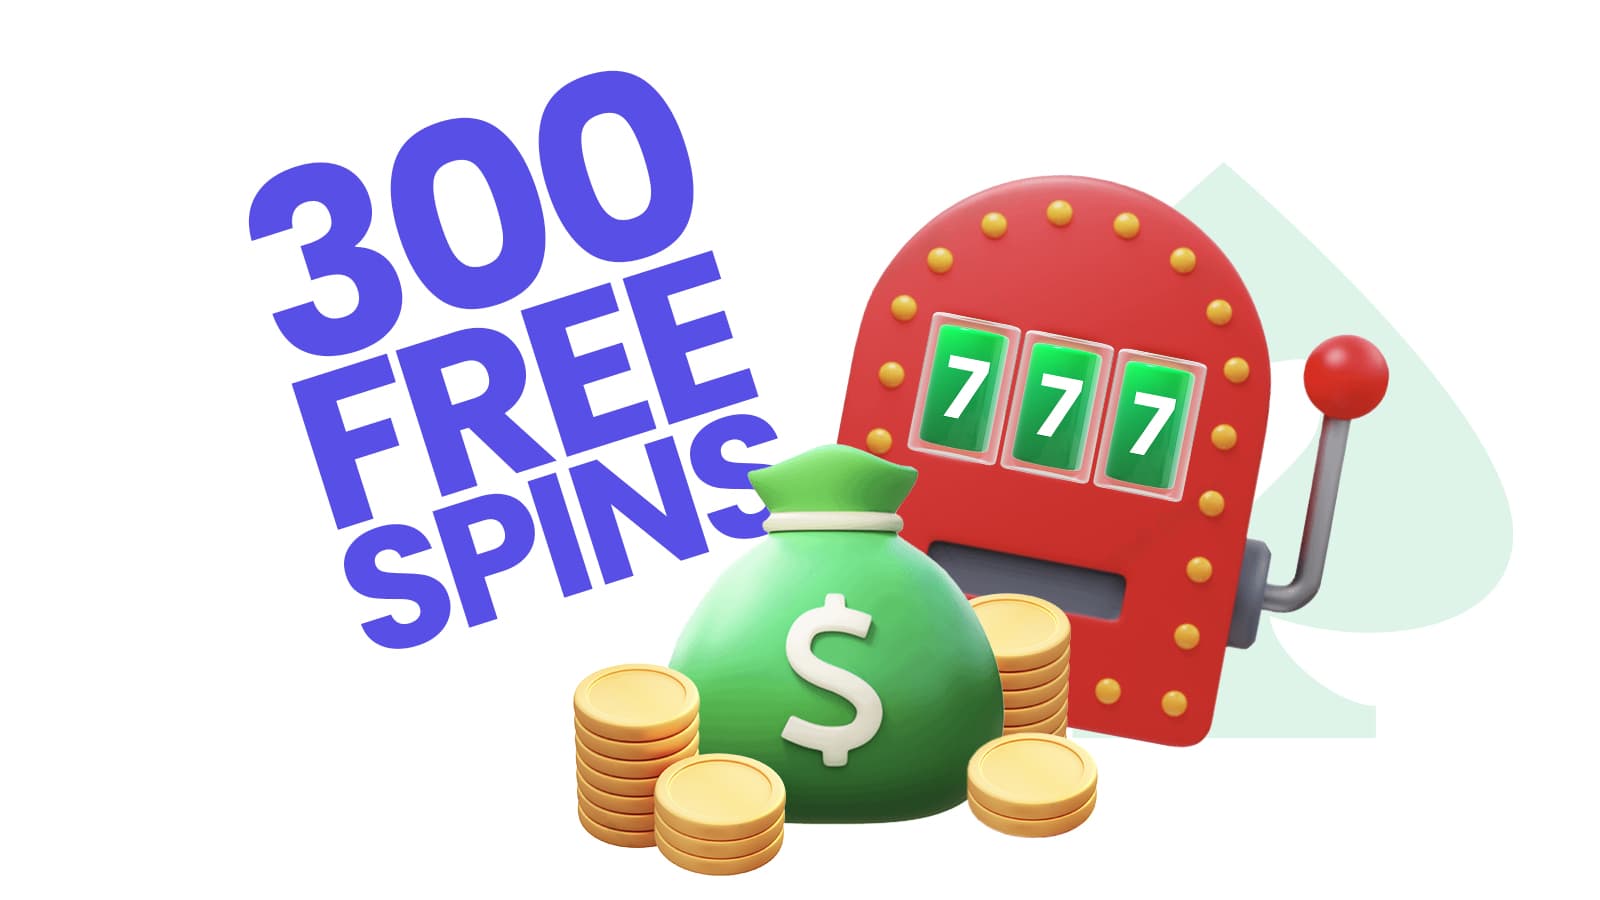 300 free spins casino